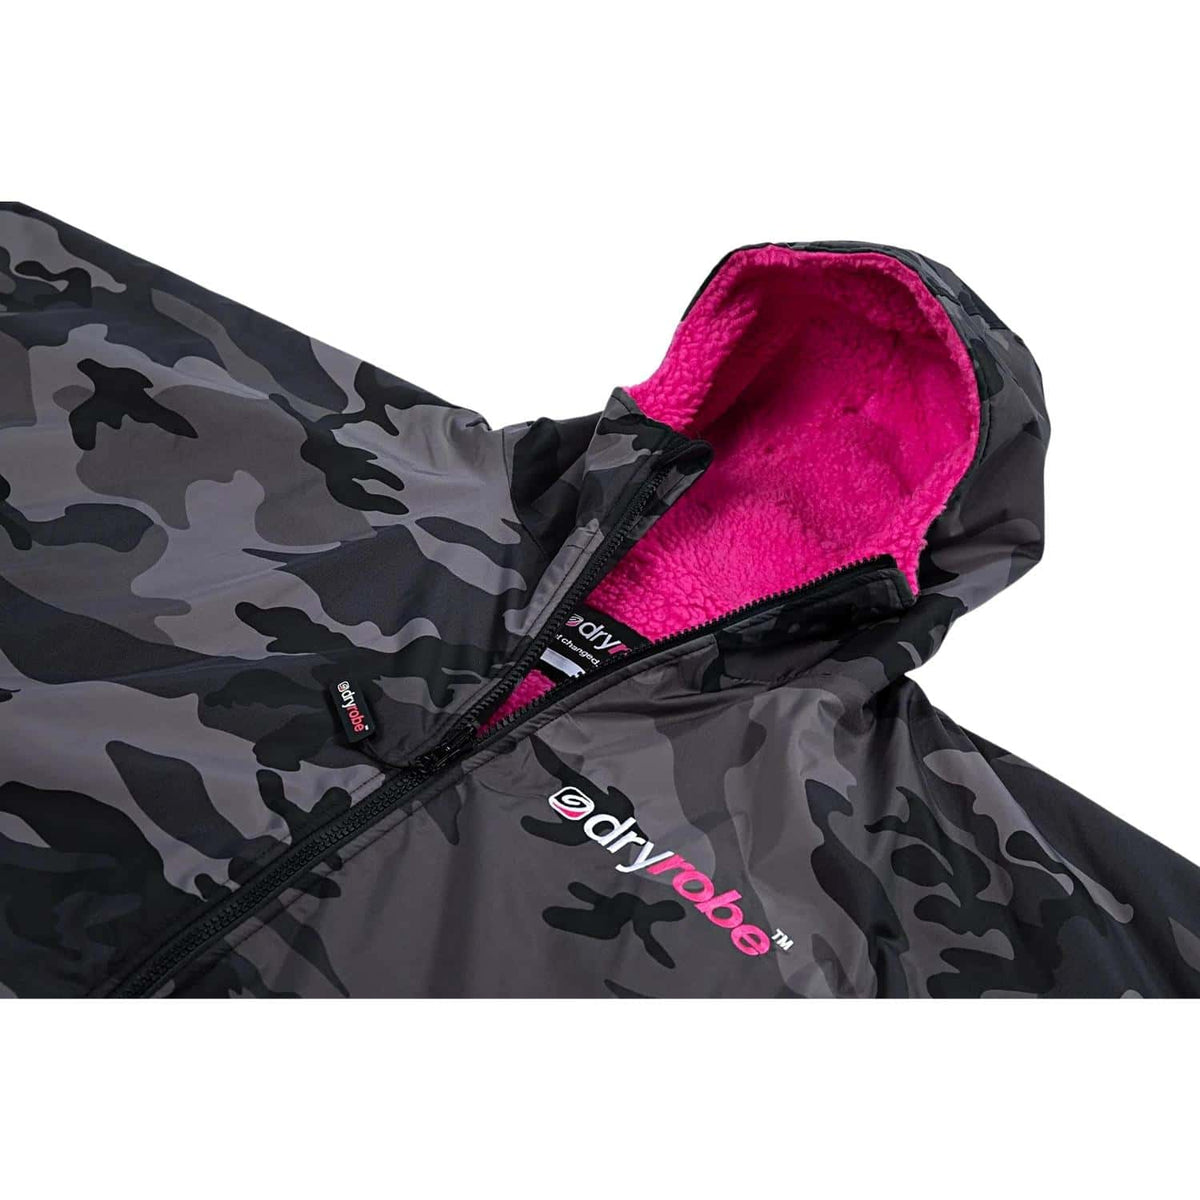 Dryrobe Advance Long Sleeve Drying &amp; Changing Robe - Black Camo/Pink